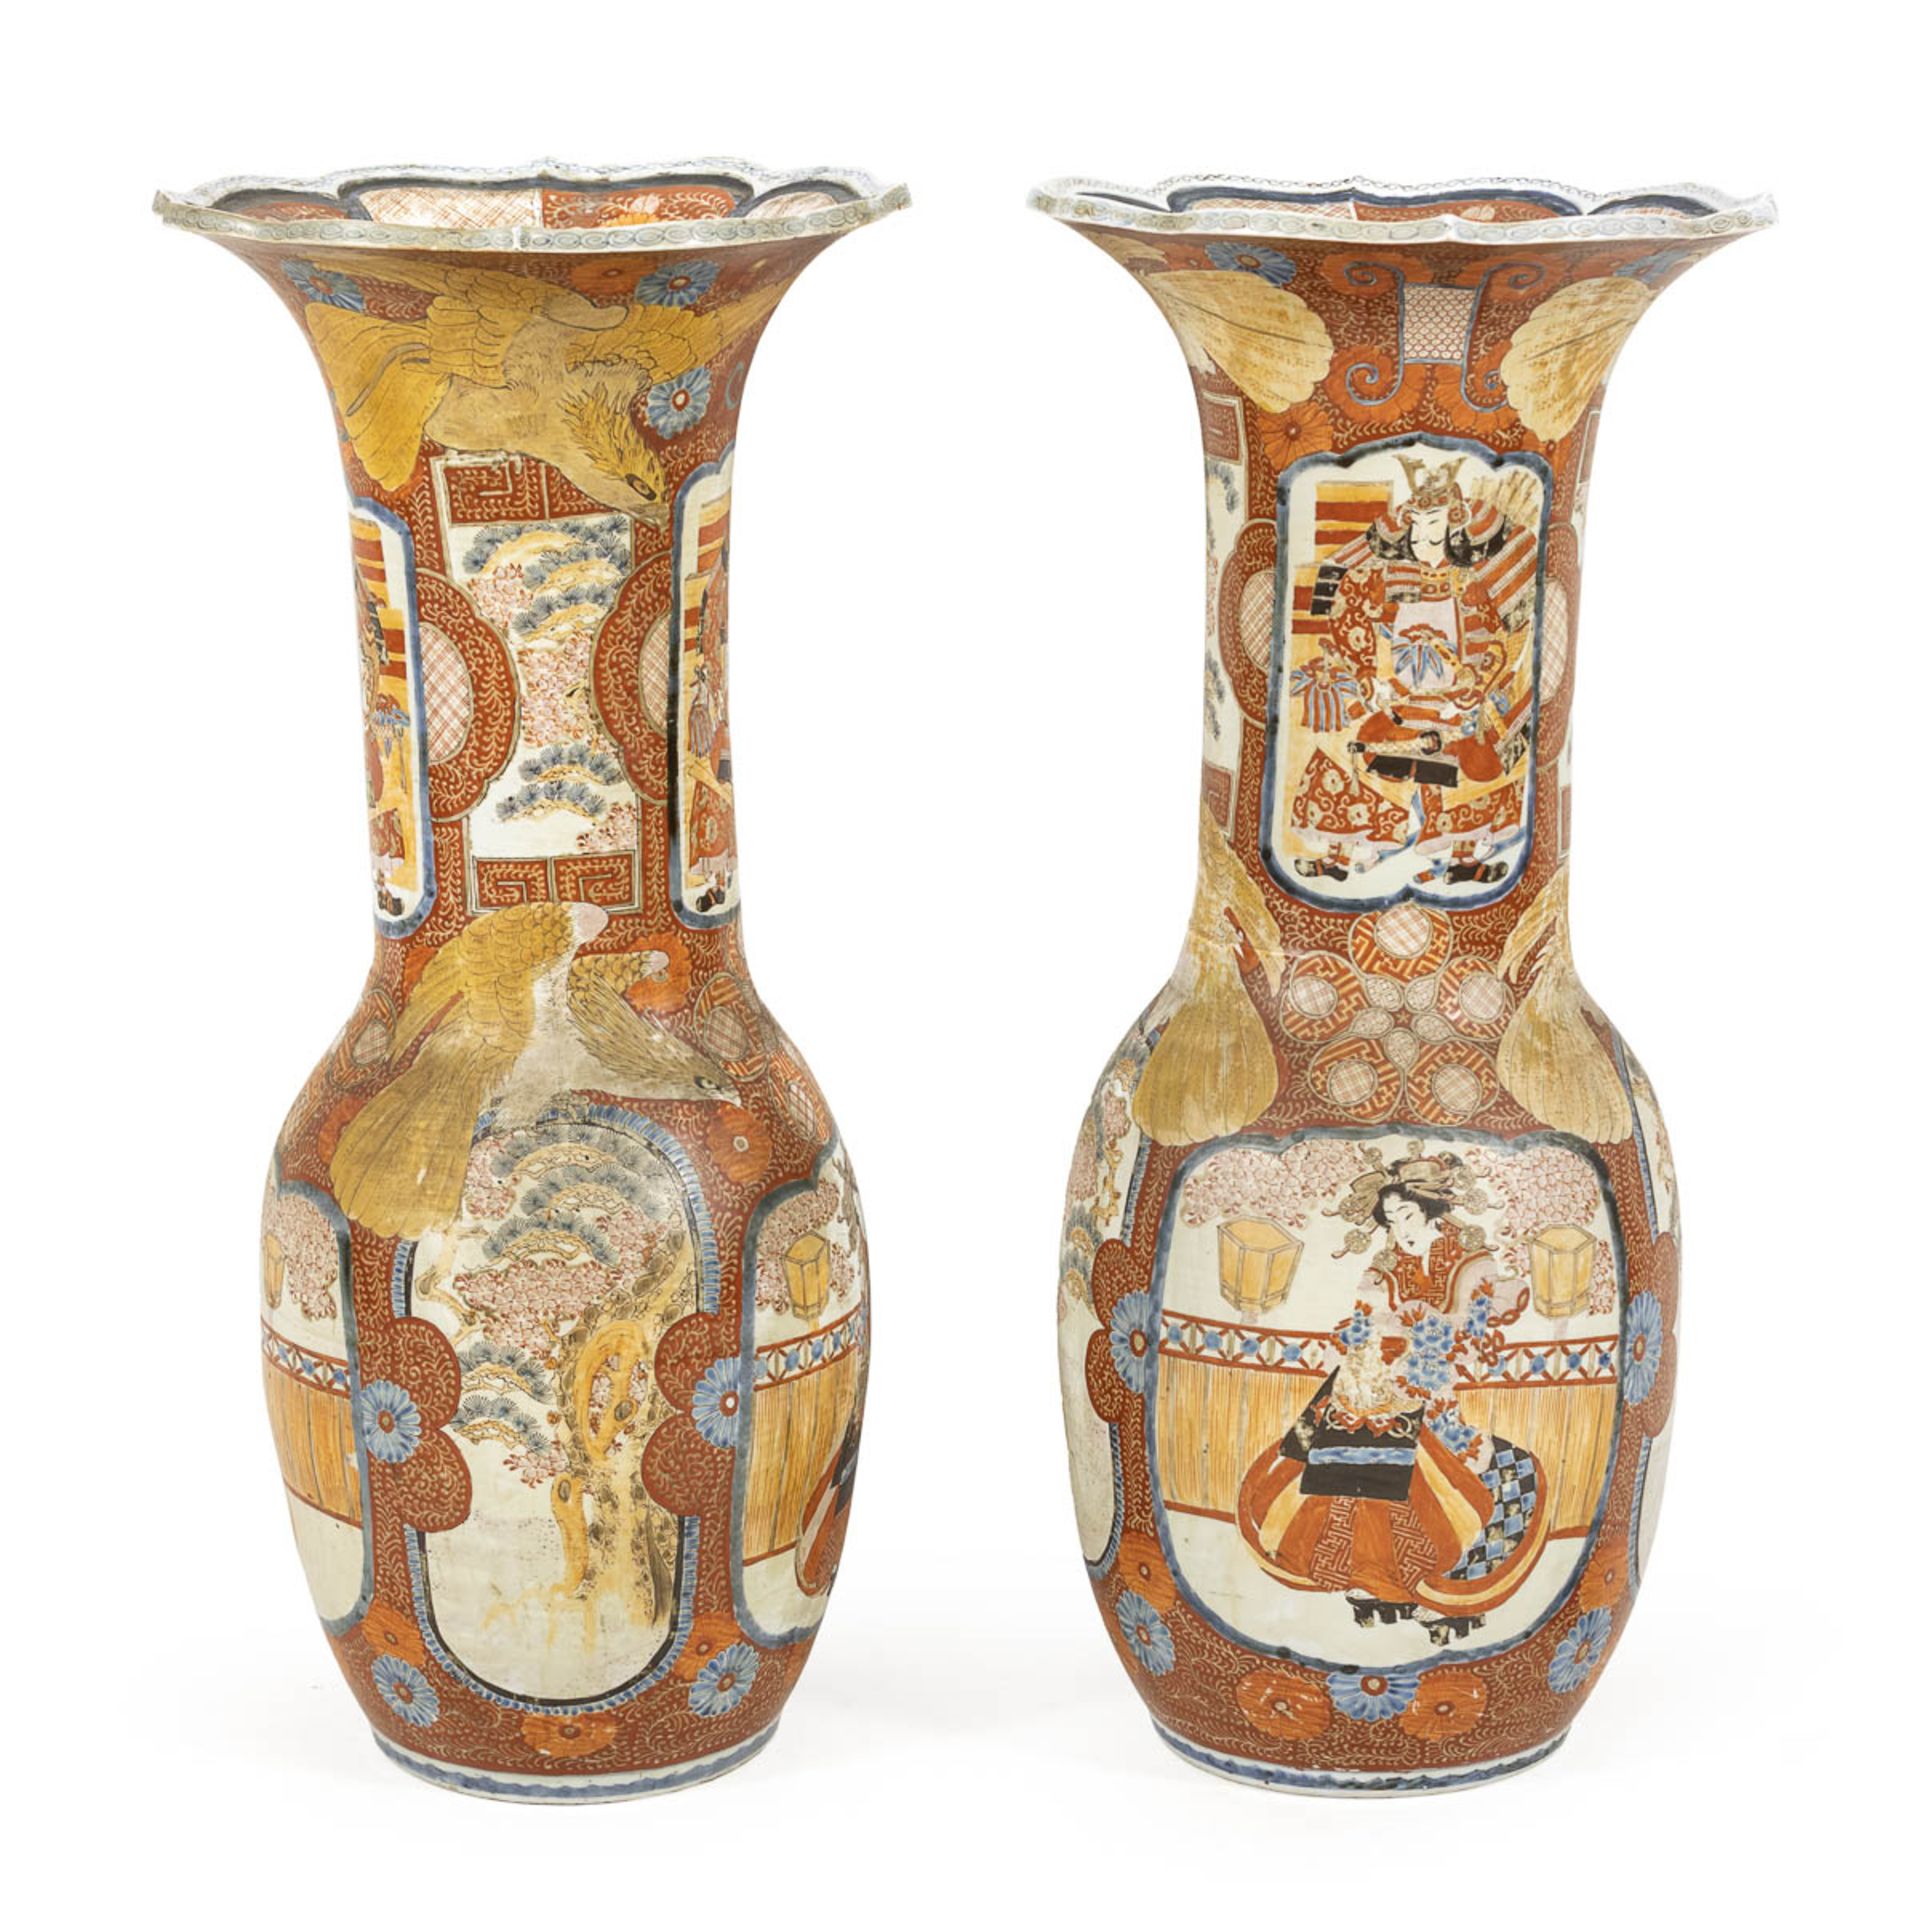 Pair of porcelain vases